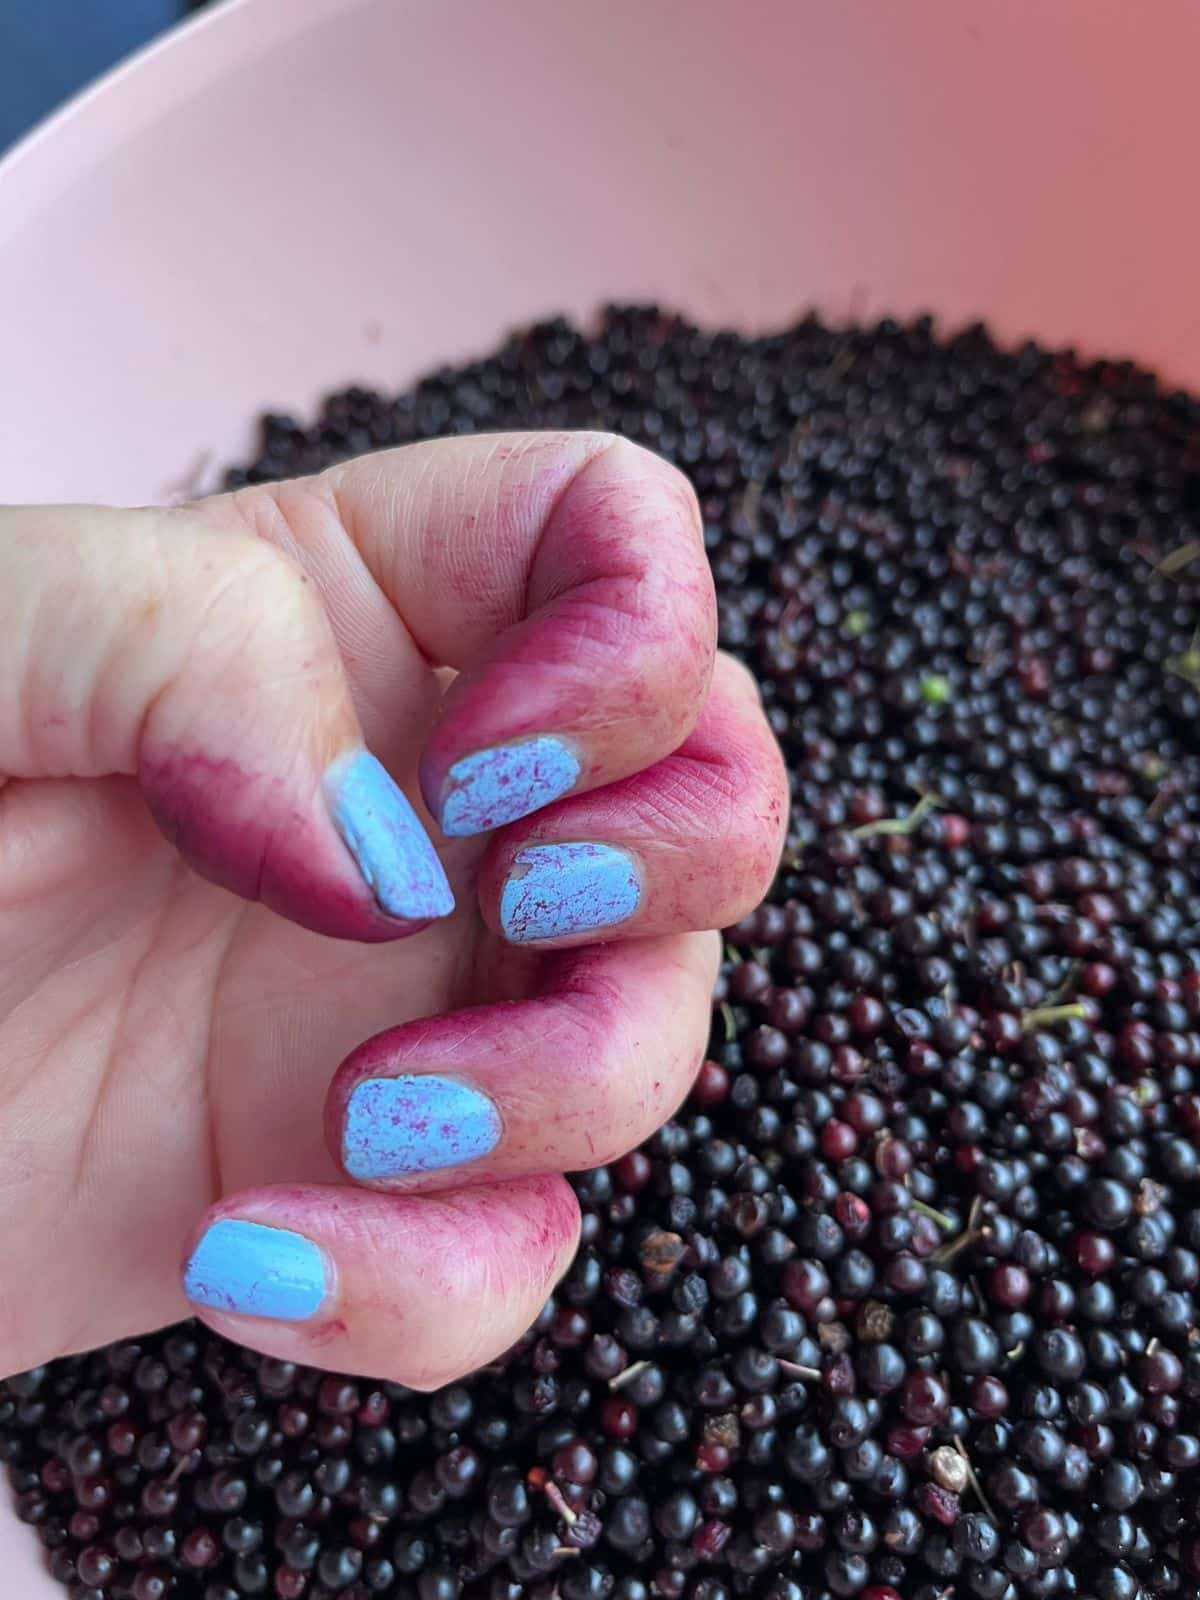 Hands stained purple from destemming elderberries